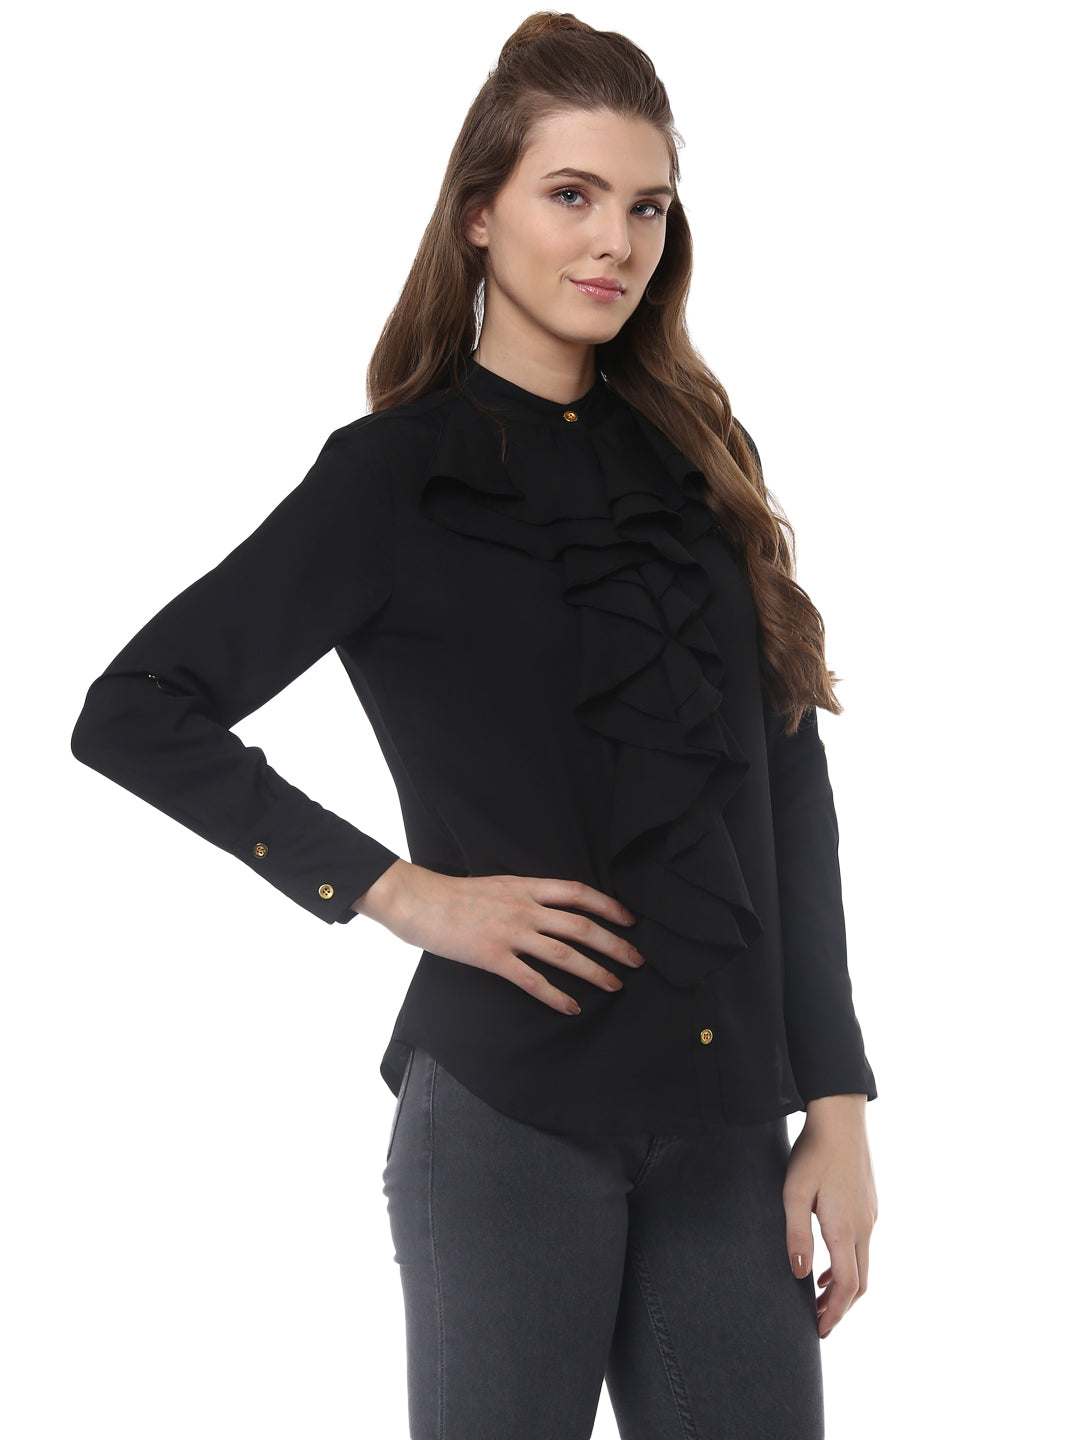 Women's Black Polyester Ruffle Top - StyleStone